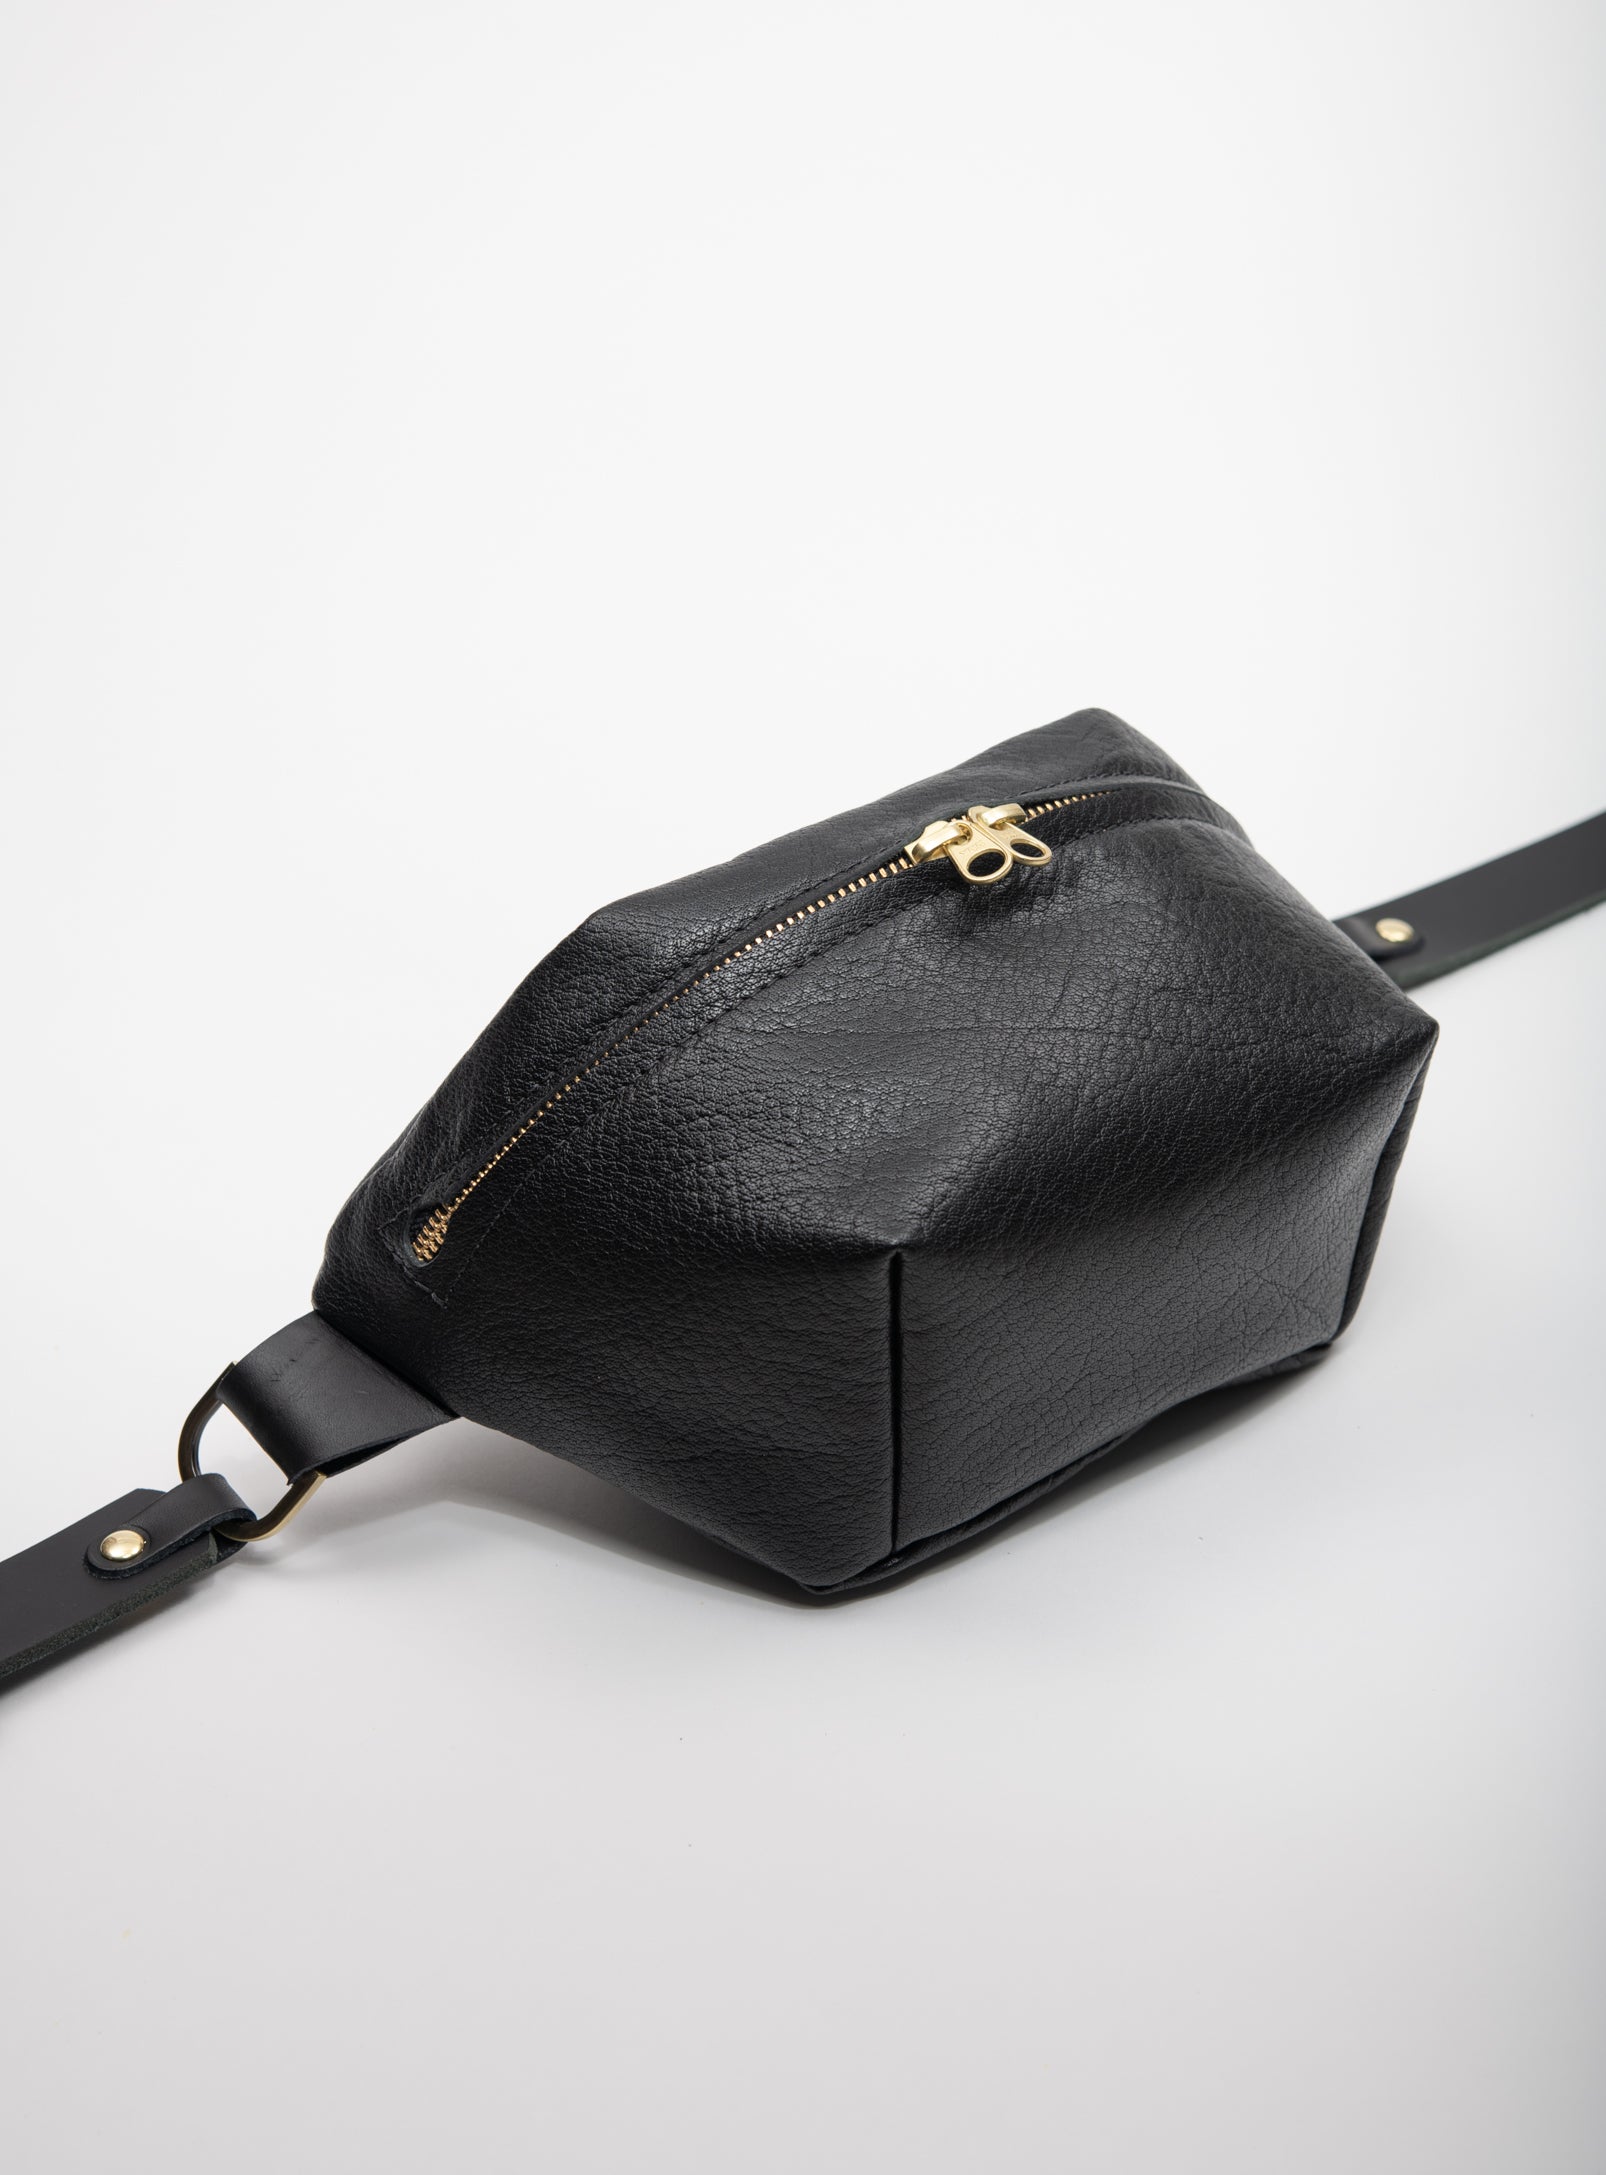 Leather fanny pack MUSA model designed by Violaine Tétreault, Veinage Montréal Canada